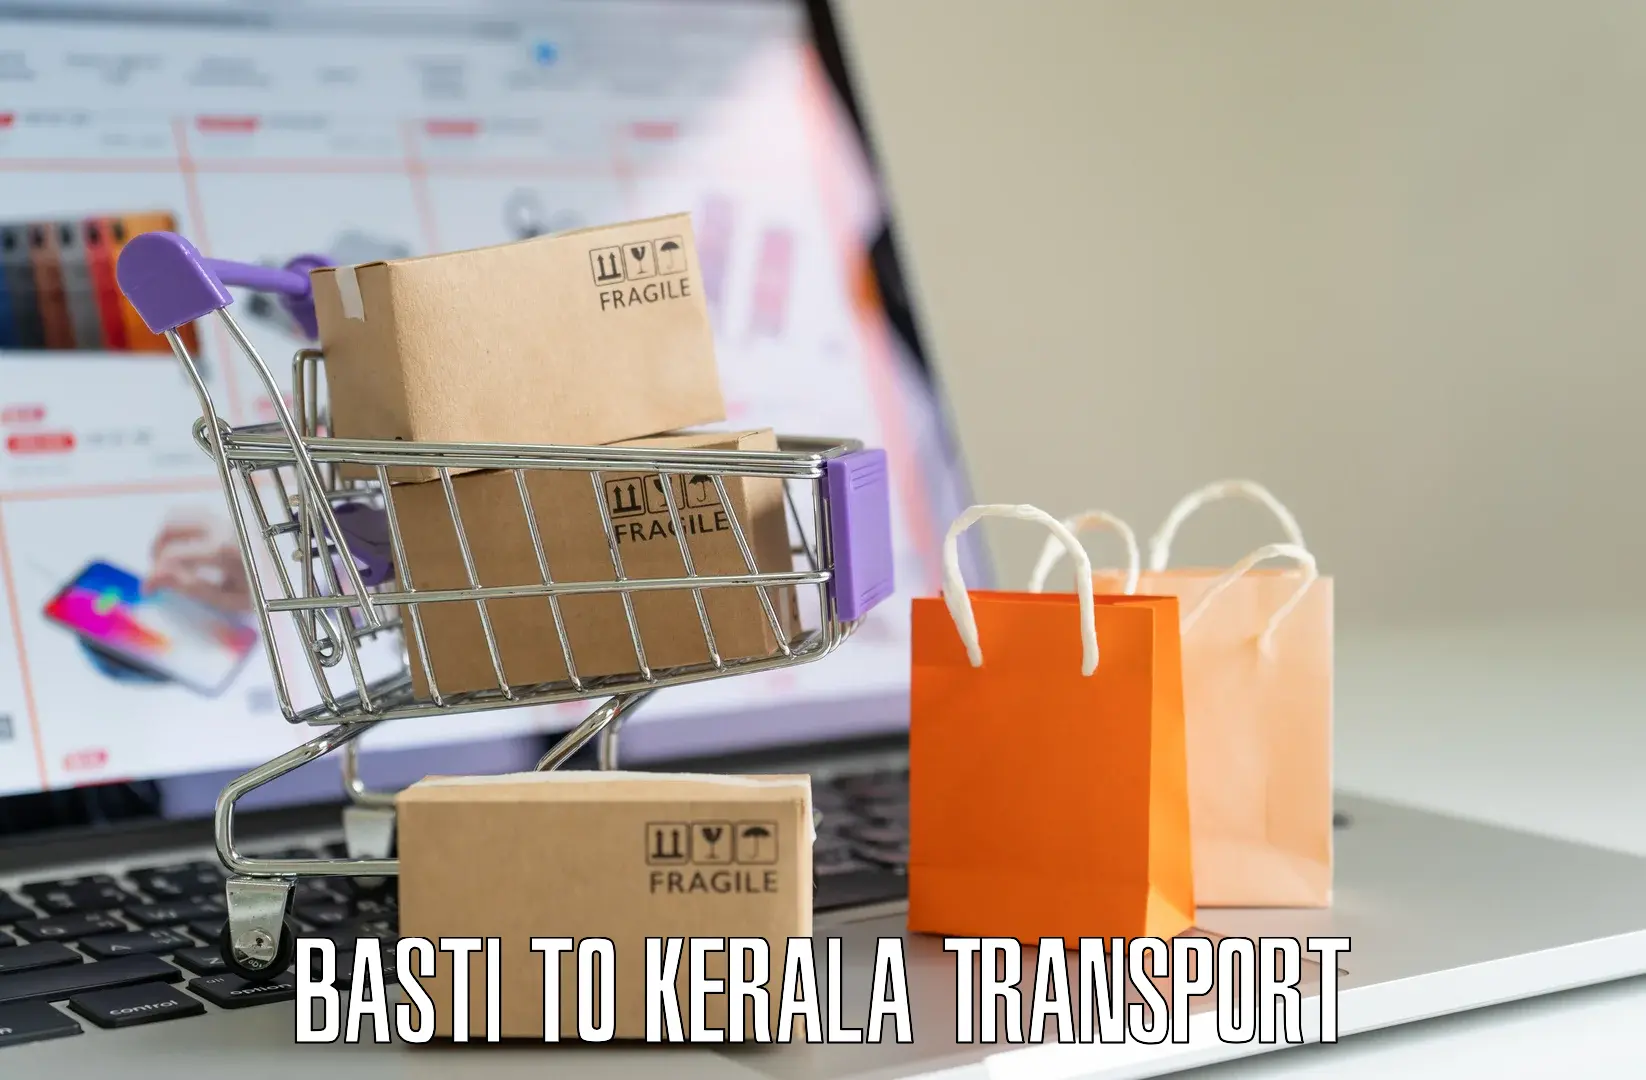 Commercial transport service Basti to Kalluvathukkal